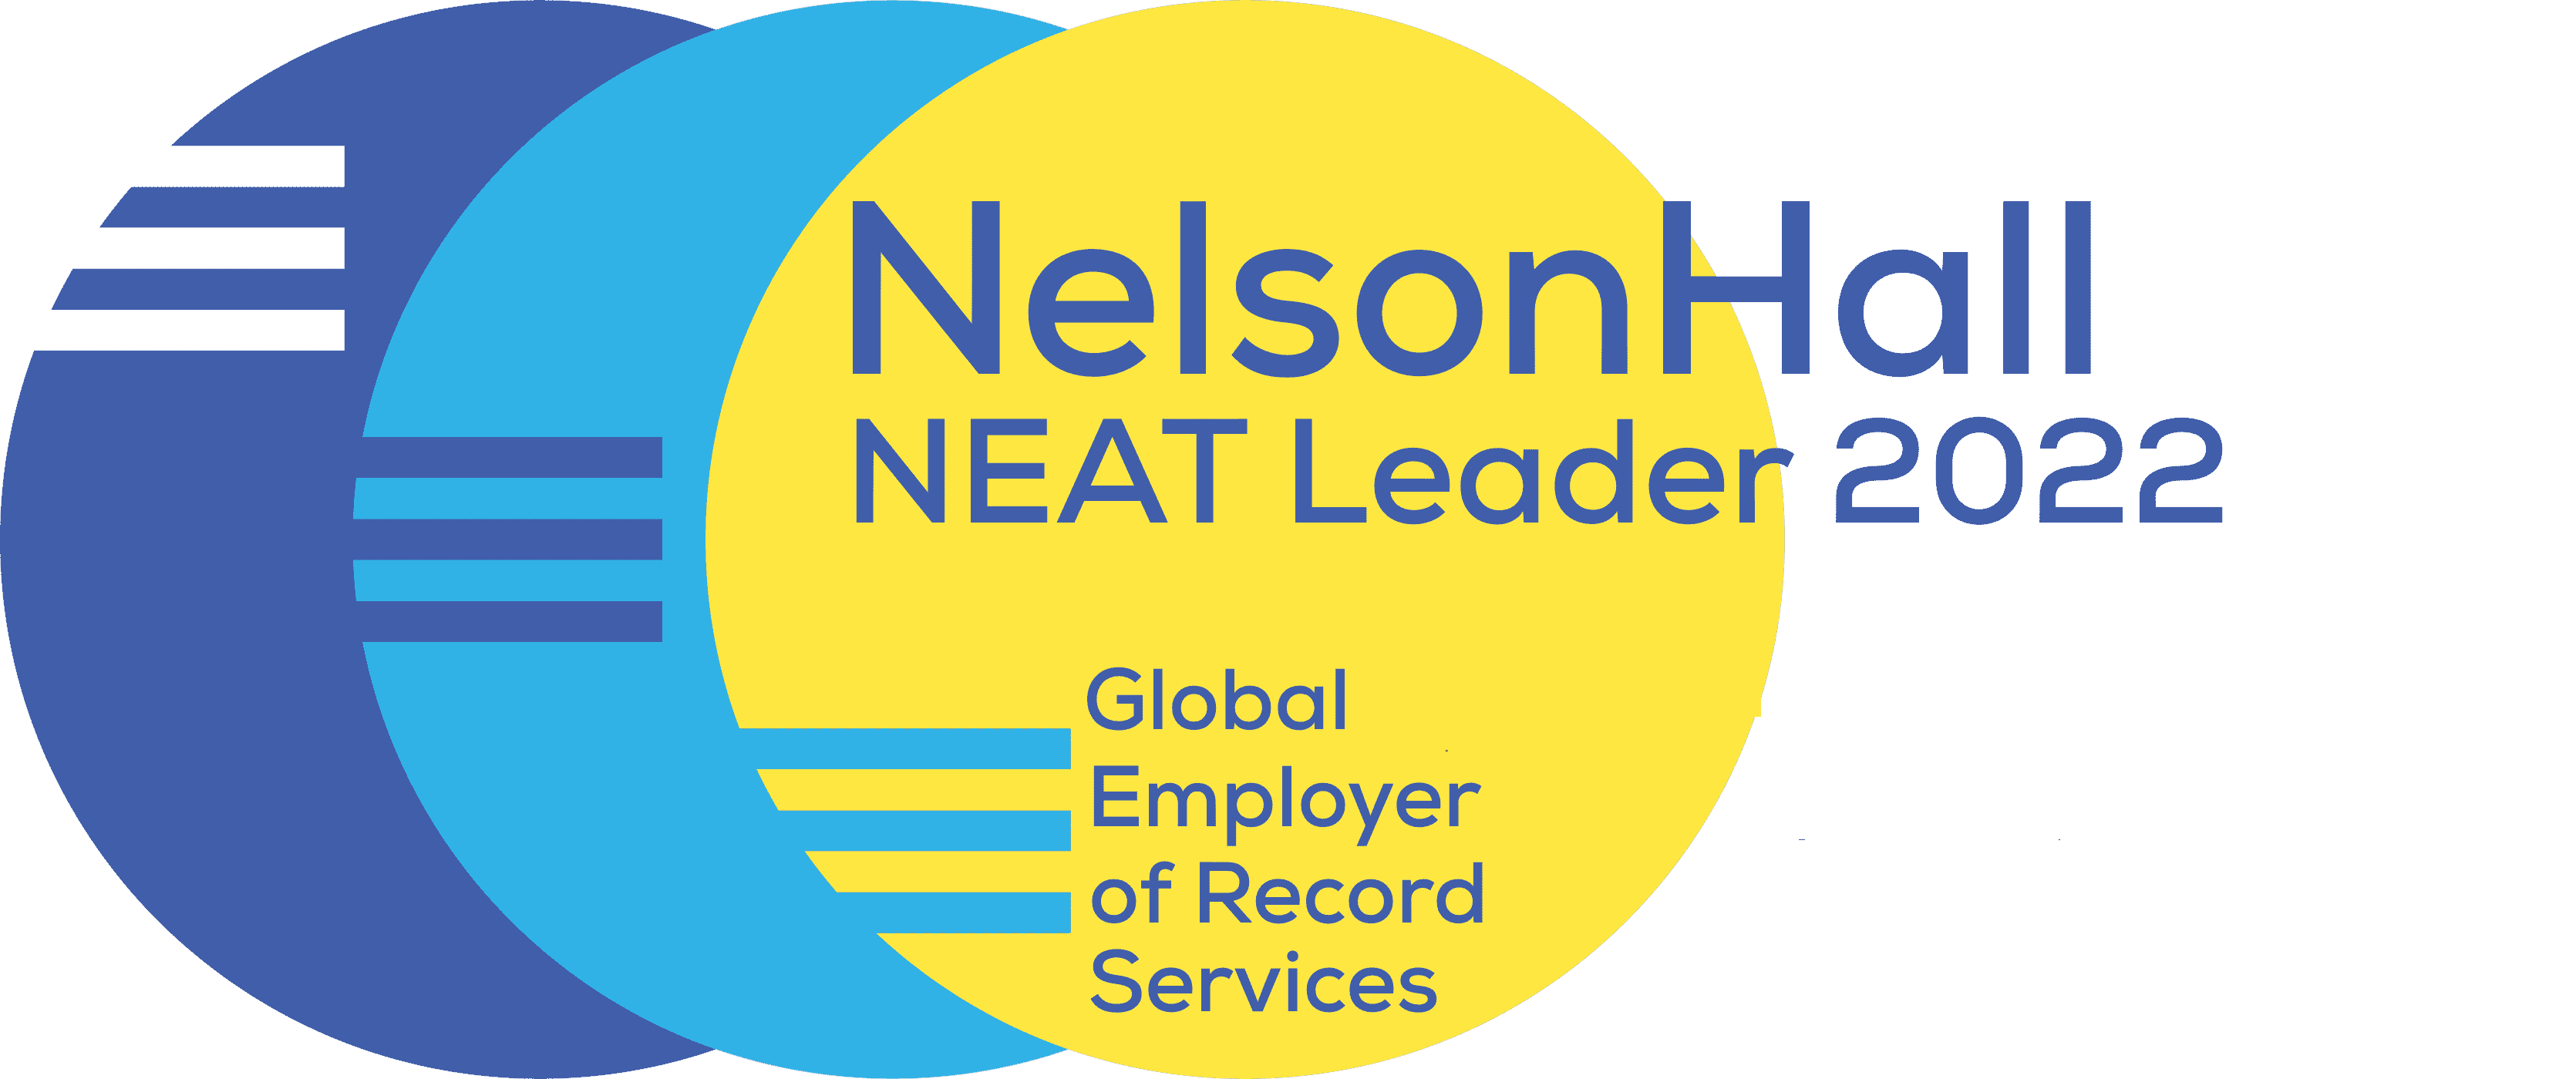 NelsonHall——通过洞察力实现变革